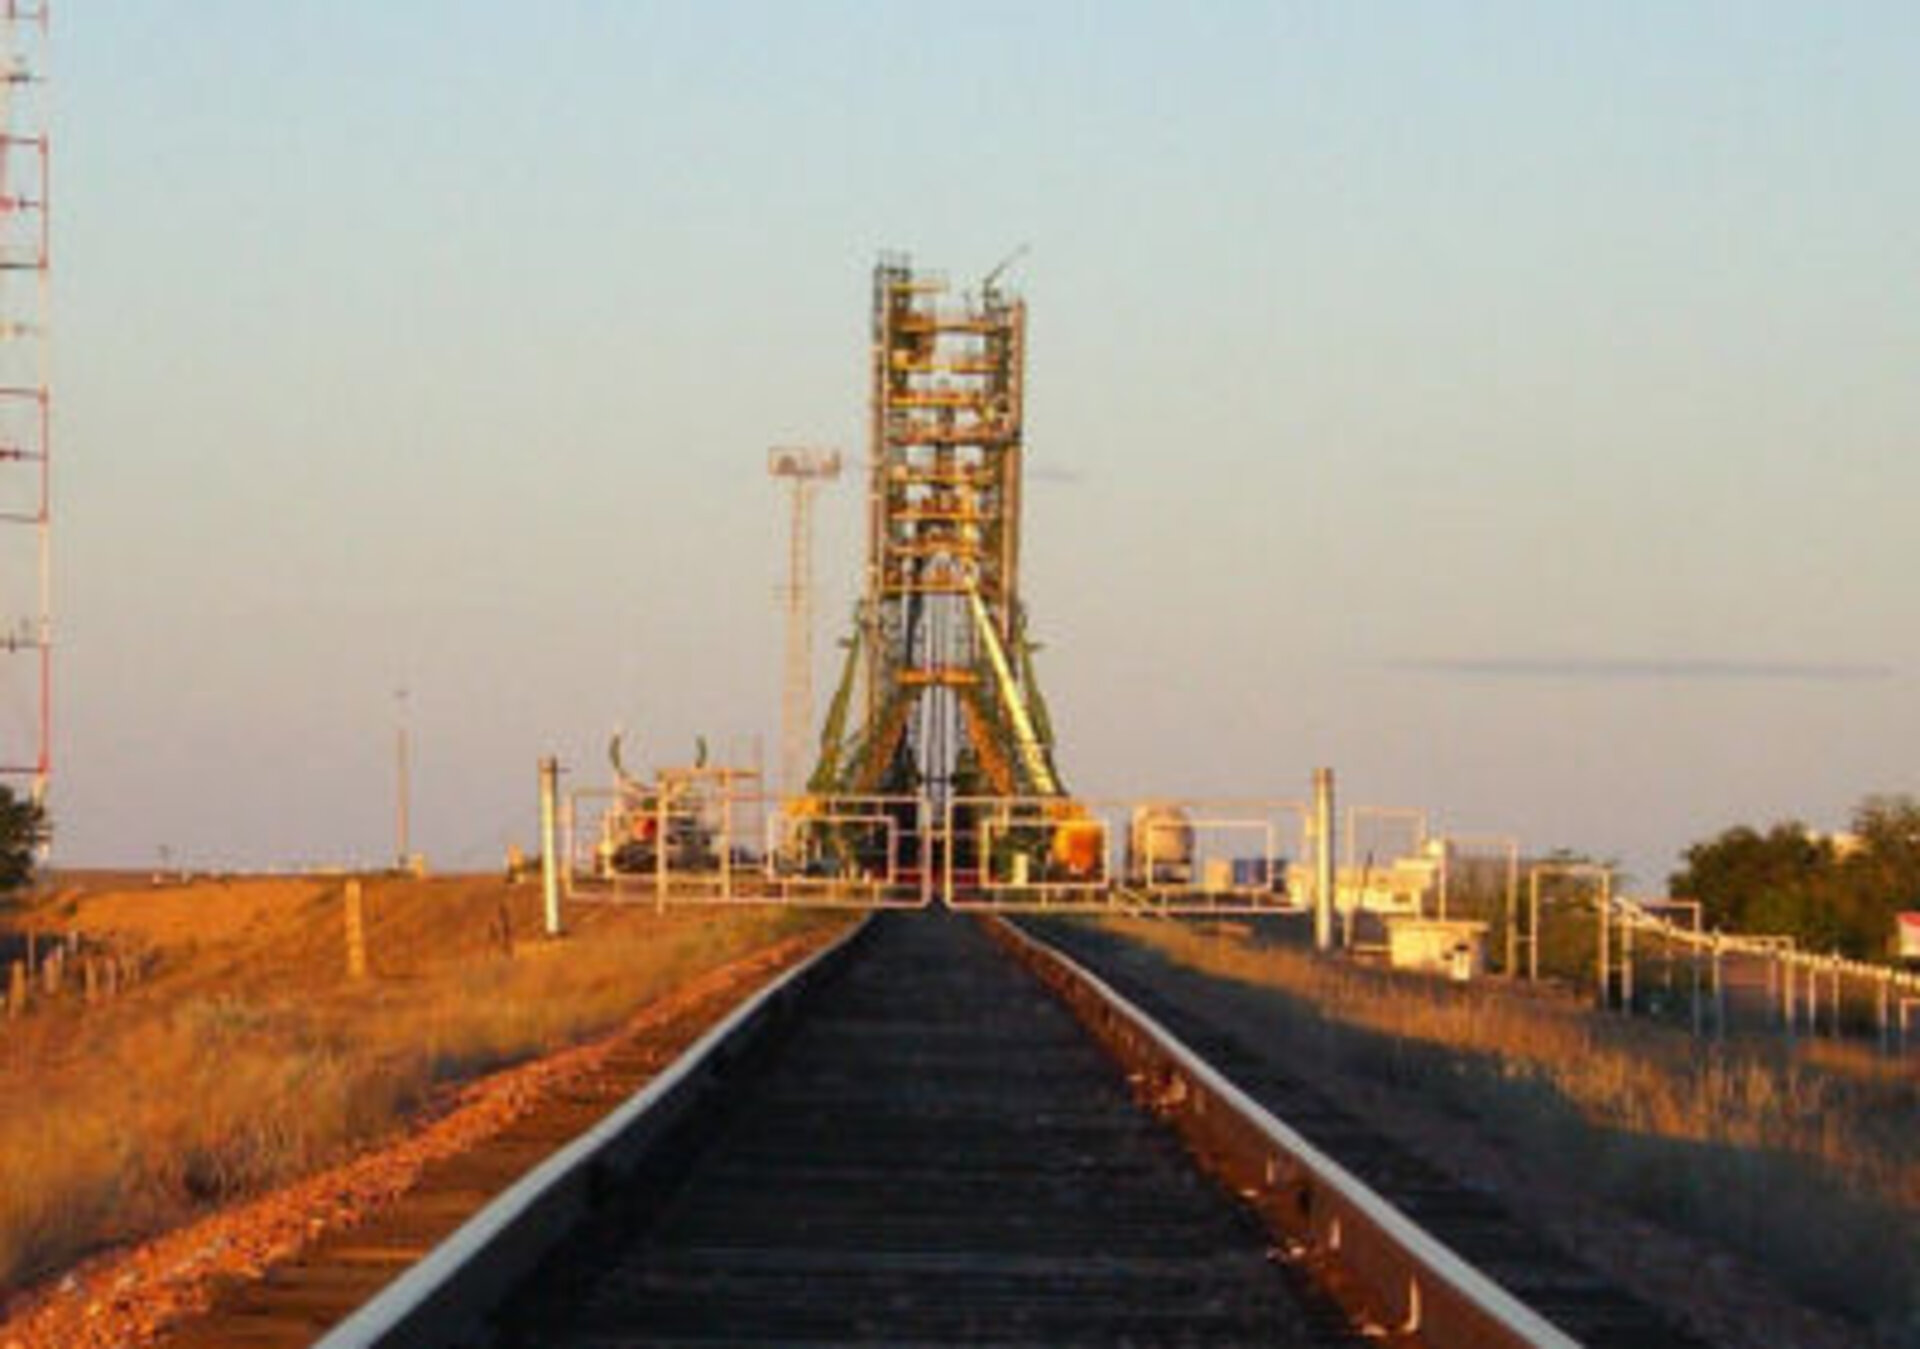 Soyuz launch pad